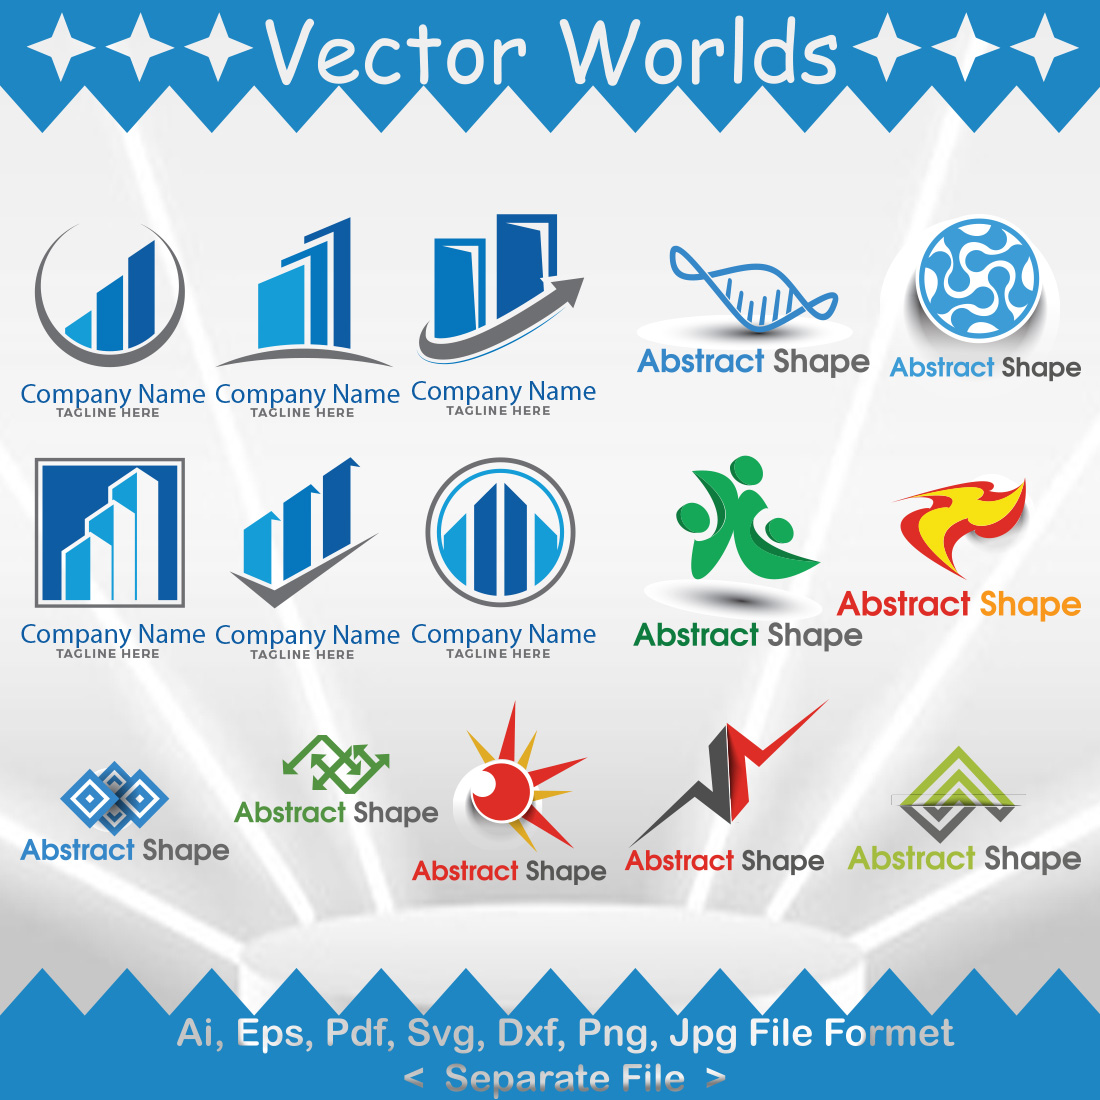 Logo Template SVG Vector Design cover image.